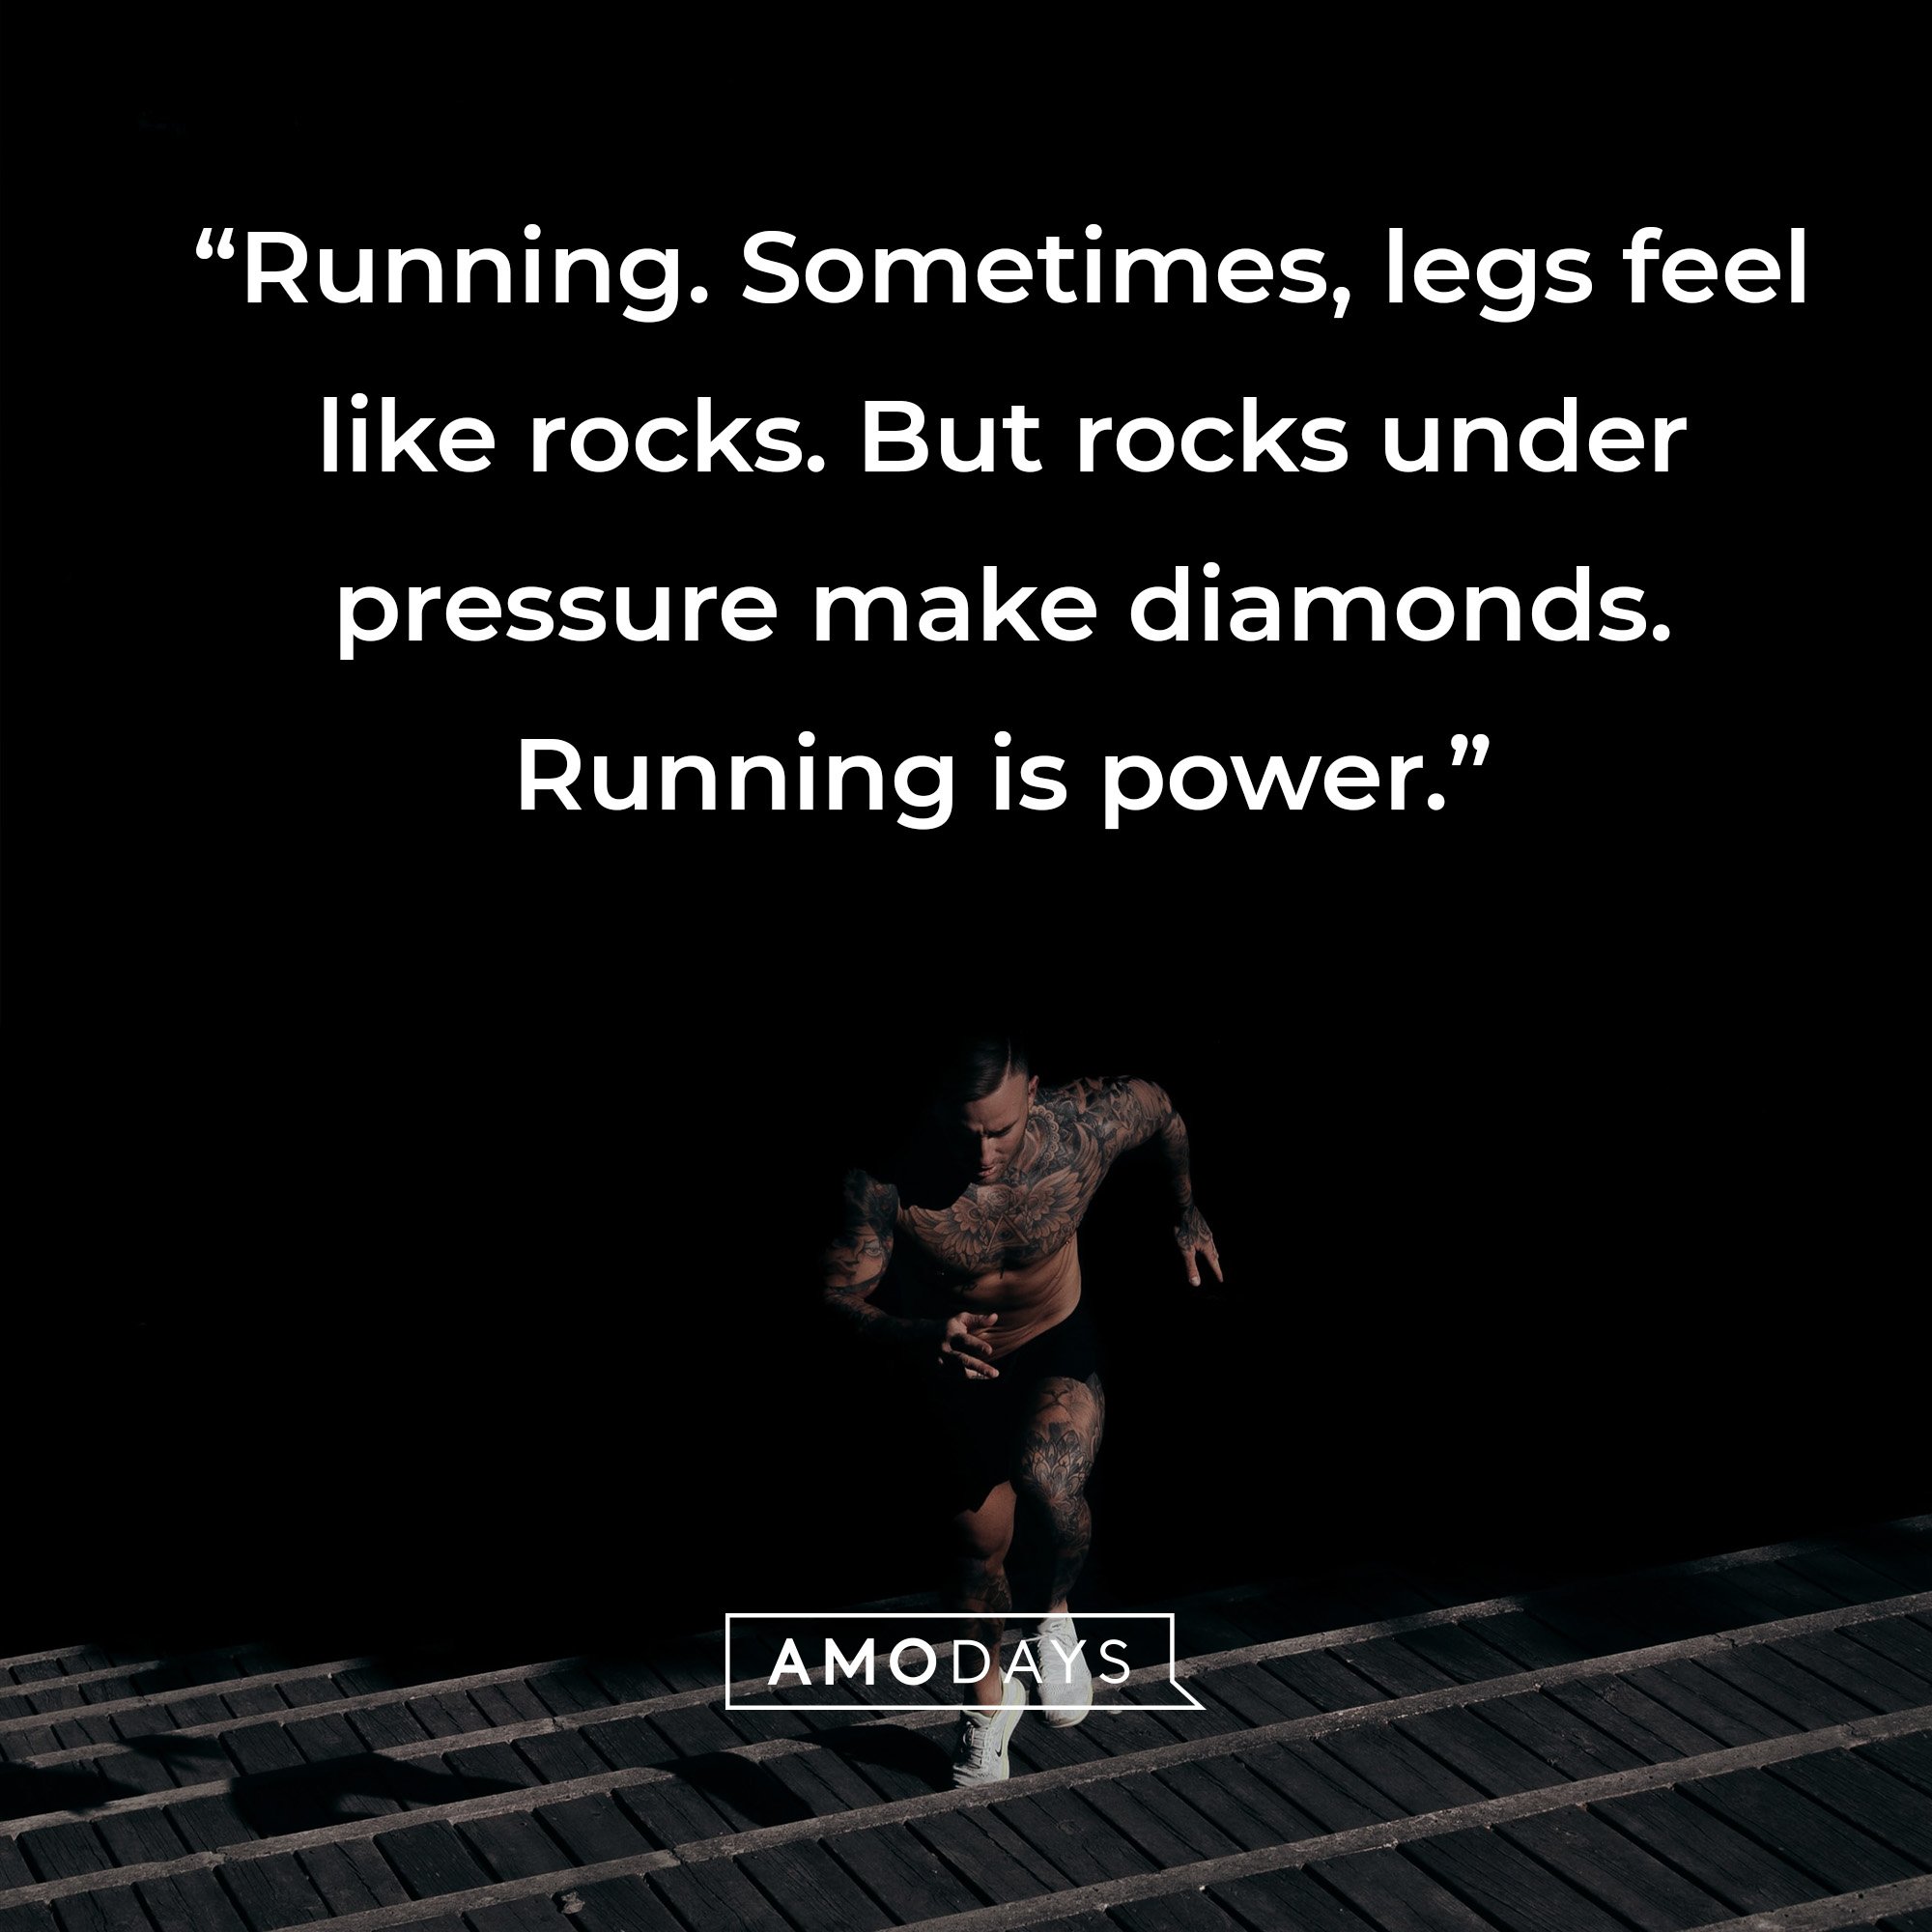 Nike’s quote: “Running. Sometimes, legs feel like rocks. But rocks under pressure make diamonds. Running is power.” | Source: AmoDays